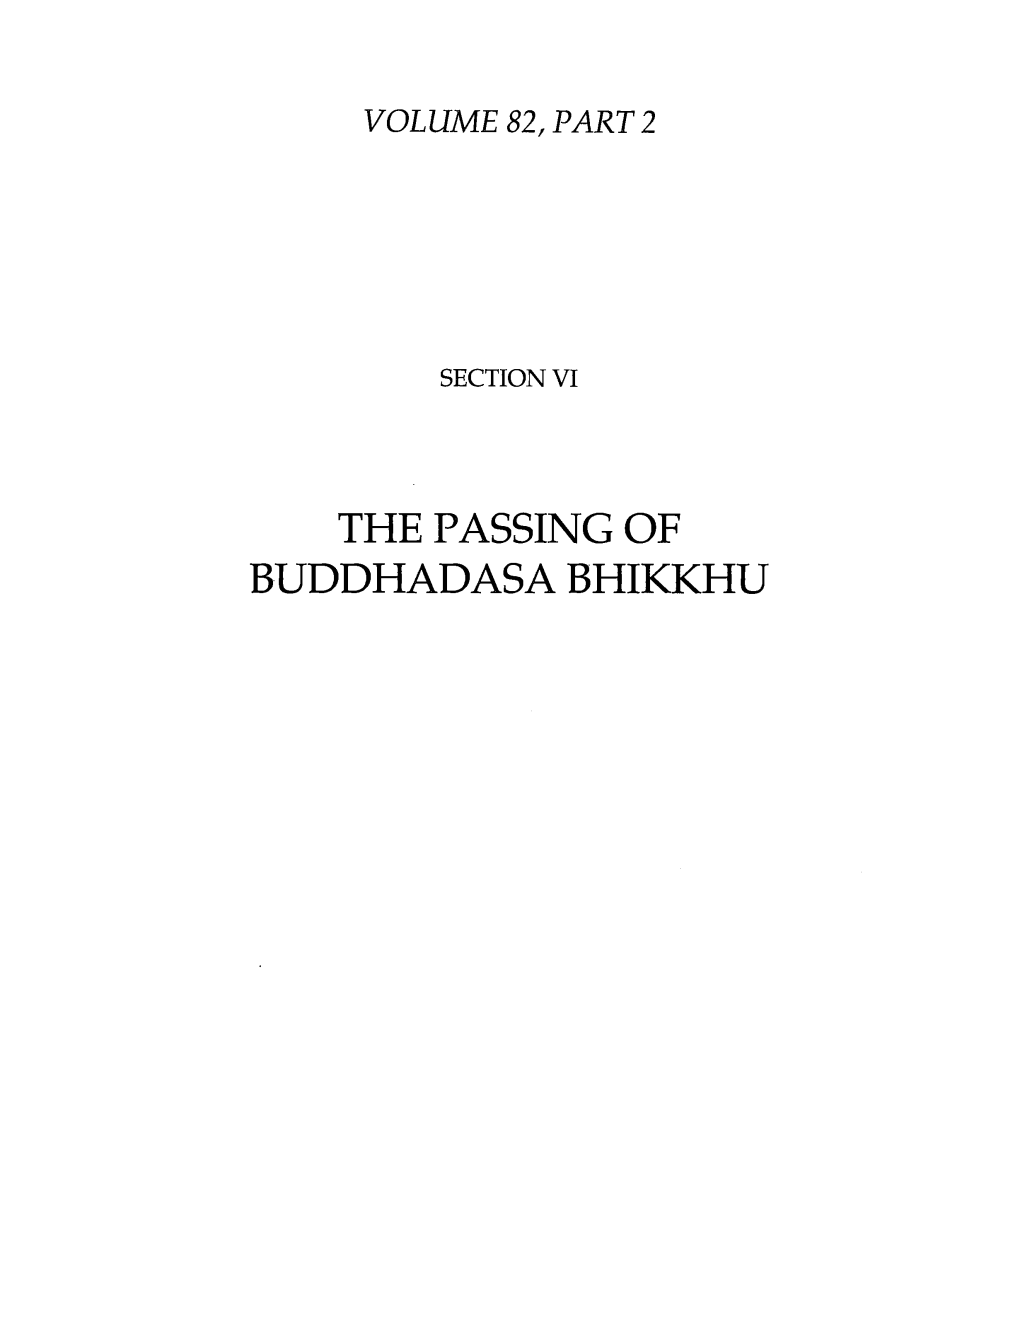 Buddhadasa Bhikkhu­ His Last Days and His Legacy1